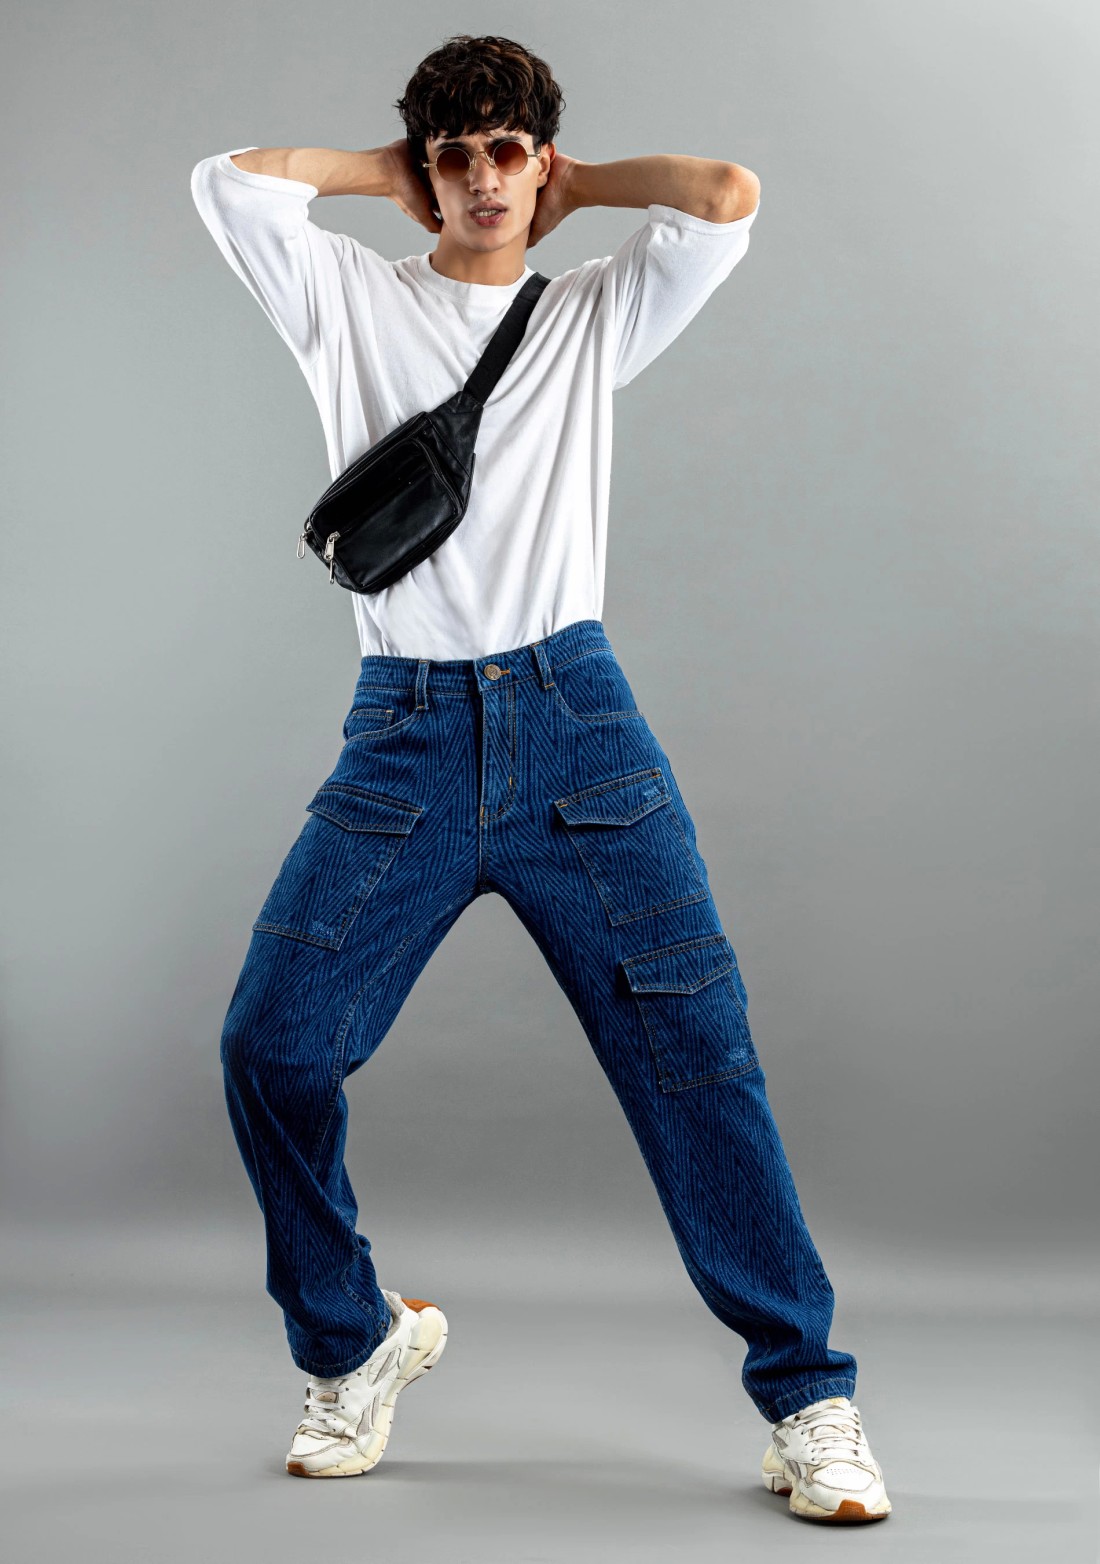 Blue Geometrical Laser Print Multi-Pocket Straight Fit Men's Jeans